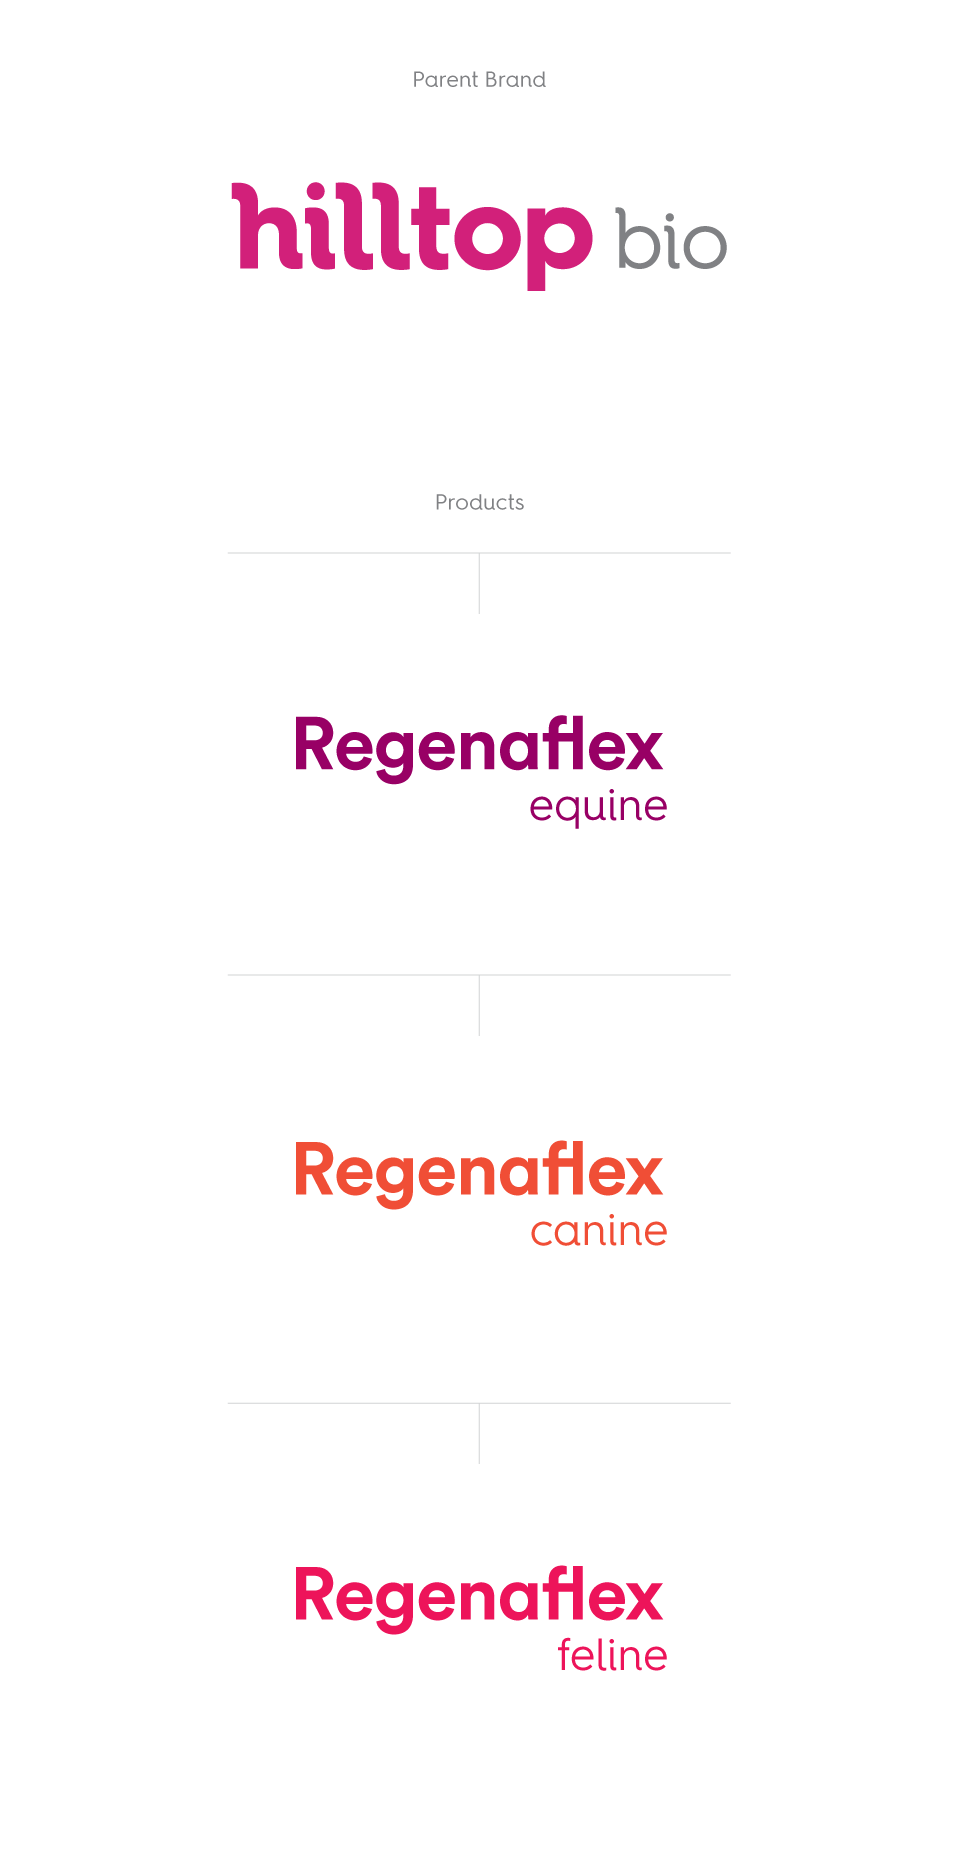 Hilltop Bio parent brand logo and individual product logos for Regenaflex equine, canine, and feline